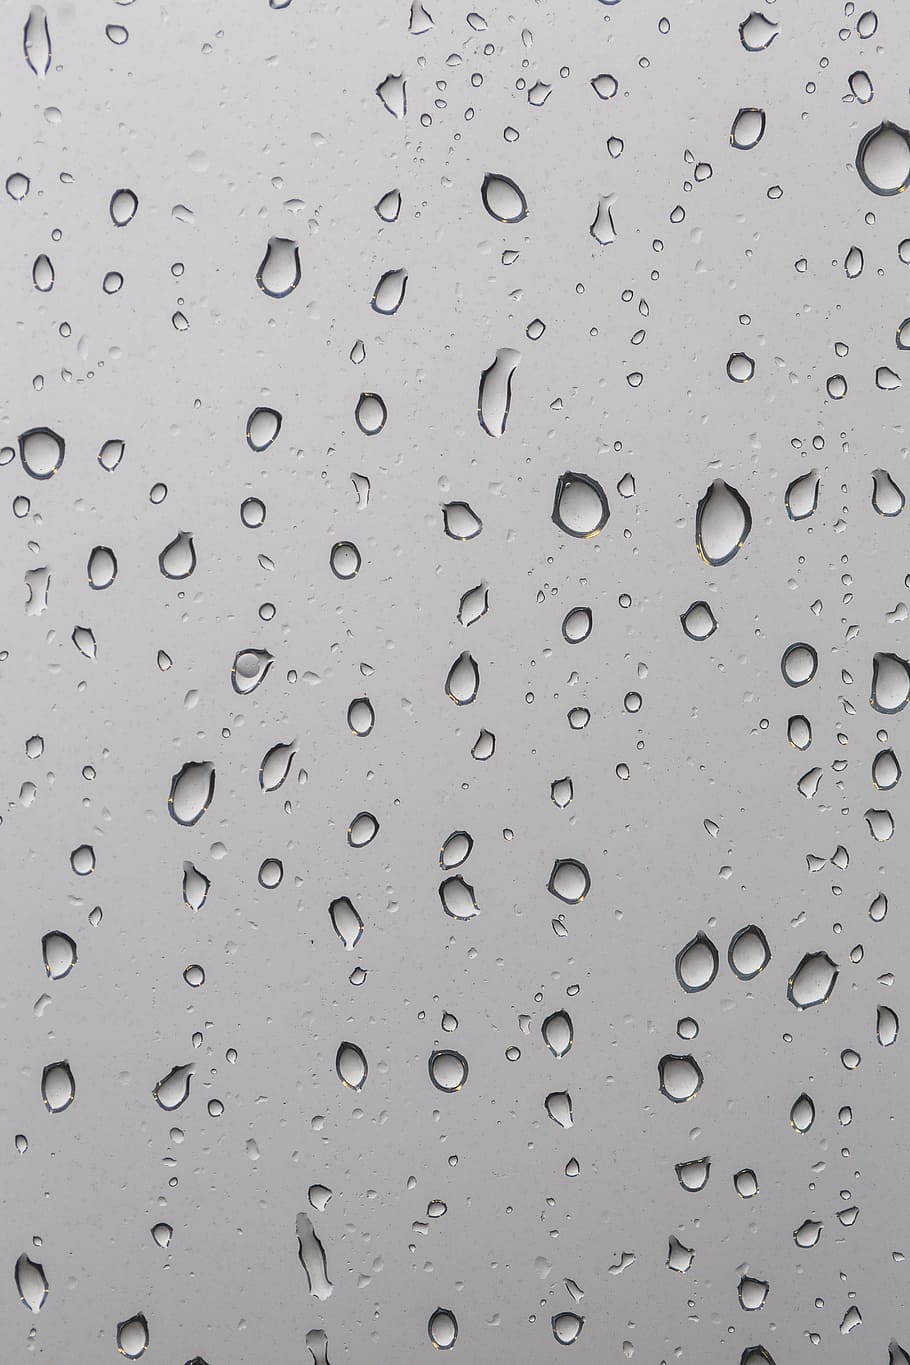 water drops, raindrops, windowpane, drop, wet, rain, backgrounds, full frame, water, glass - material